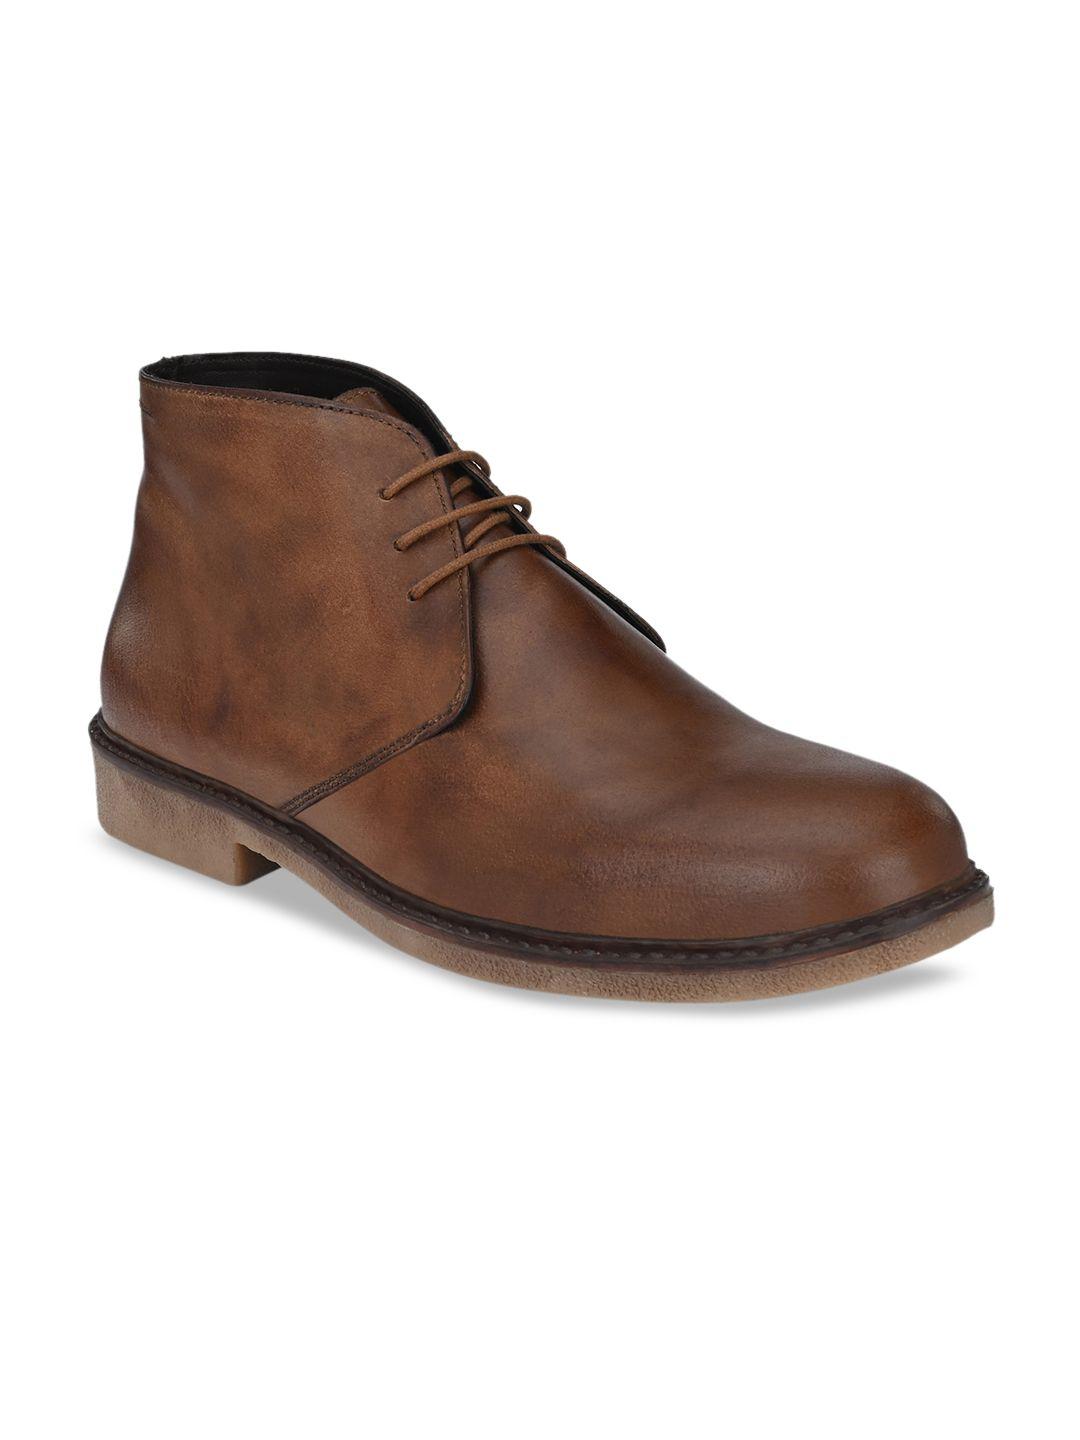 carlo romano men brown leather flat boots